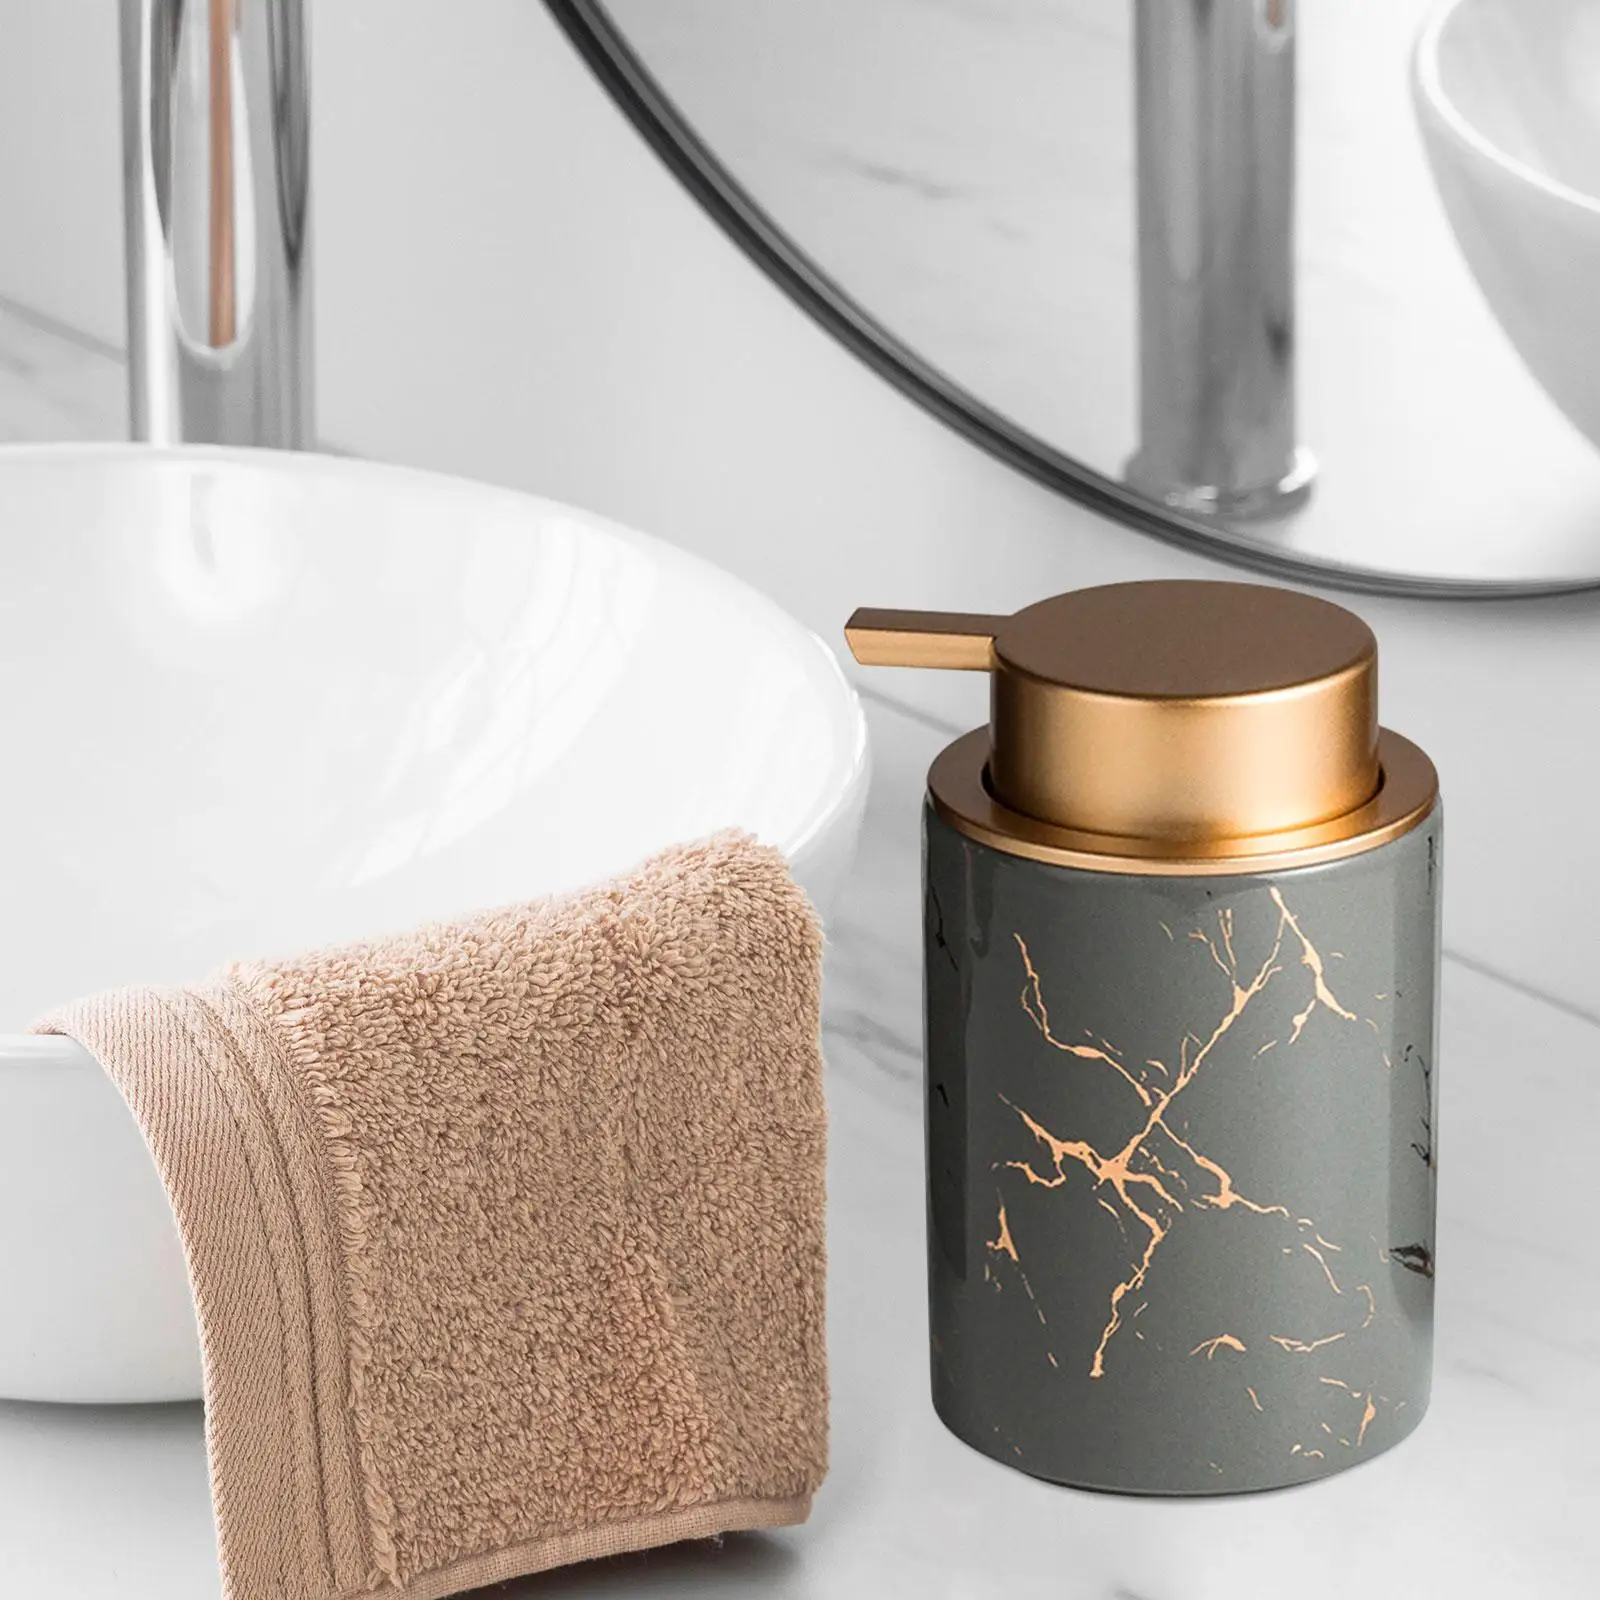 Ceramic Soap Dispenser Manual Lotion Bottle for Office Wash Room Countertop